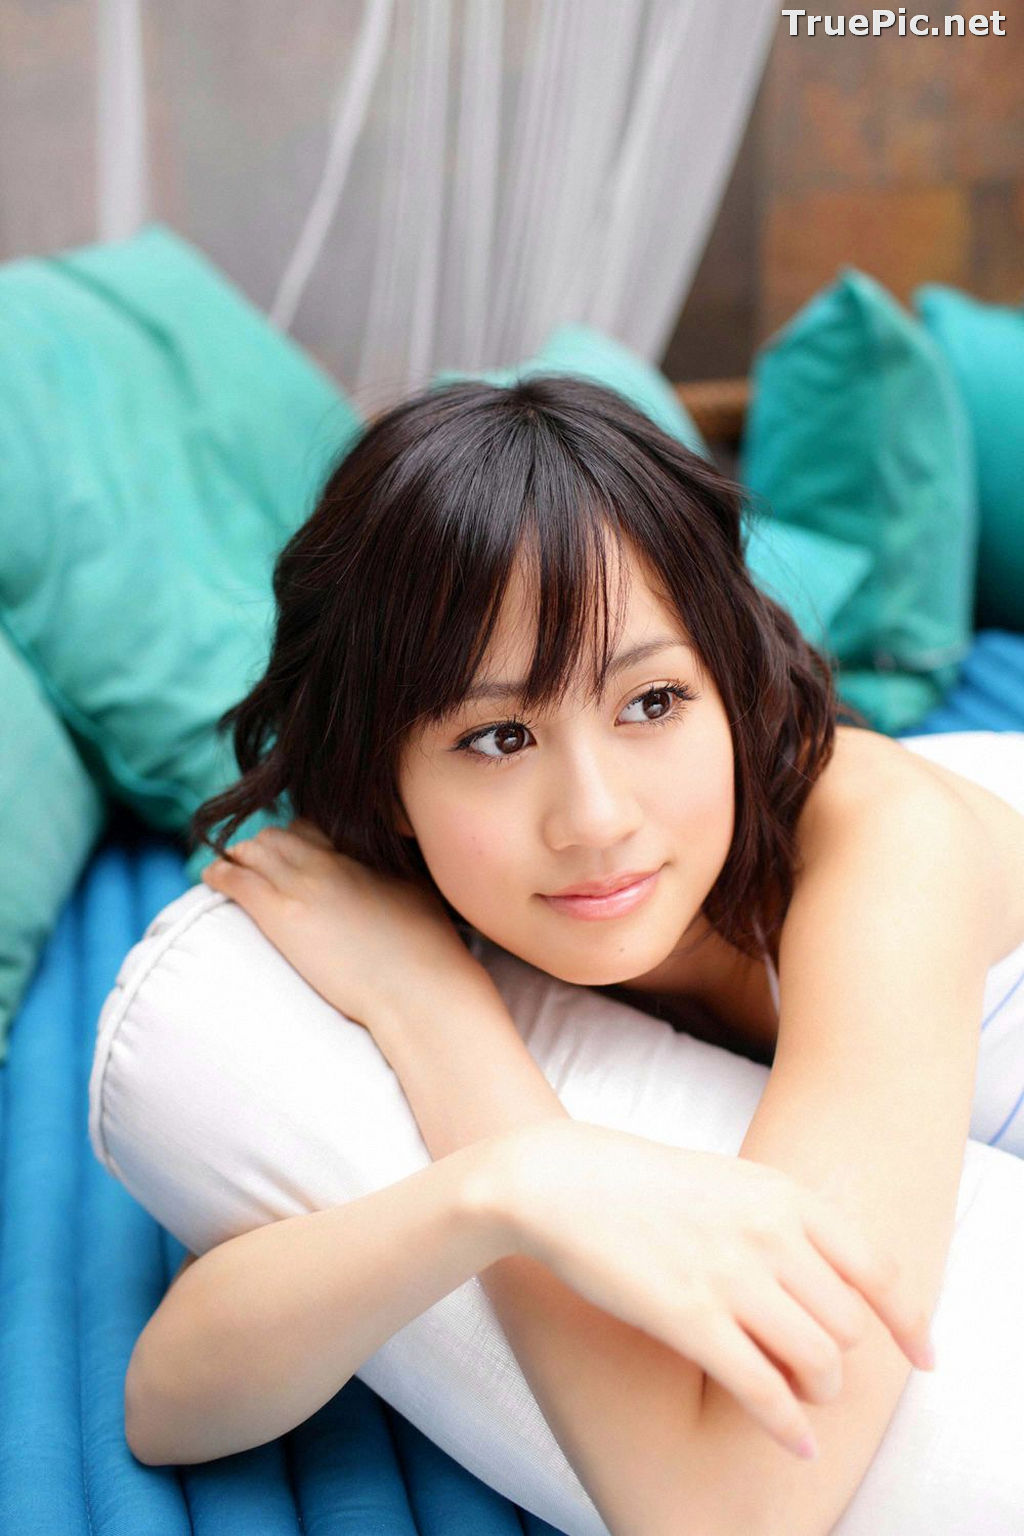 Image [YS Web] Vol.330 - Japanese Actress and Singer - Maeda Atsuko - TruePic.net - Picture-44